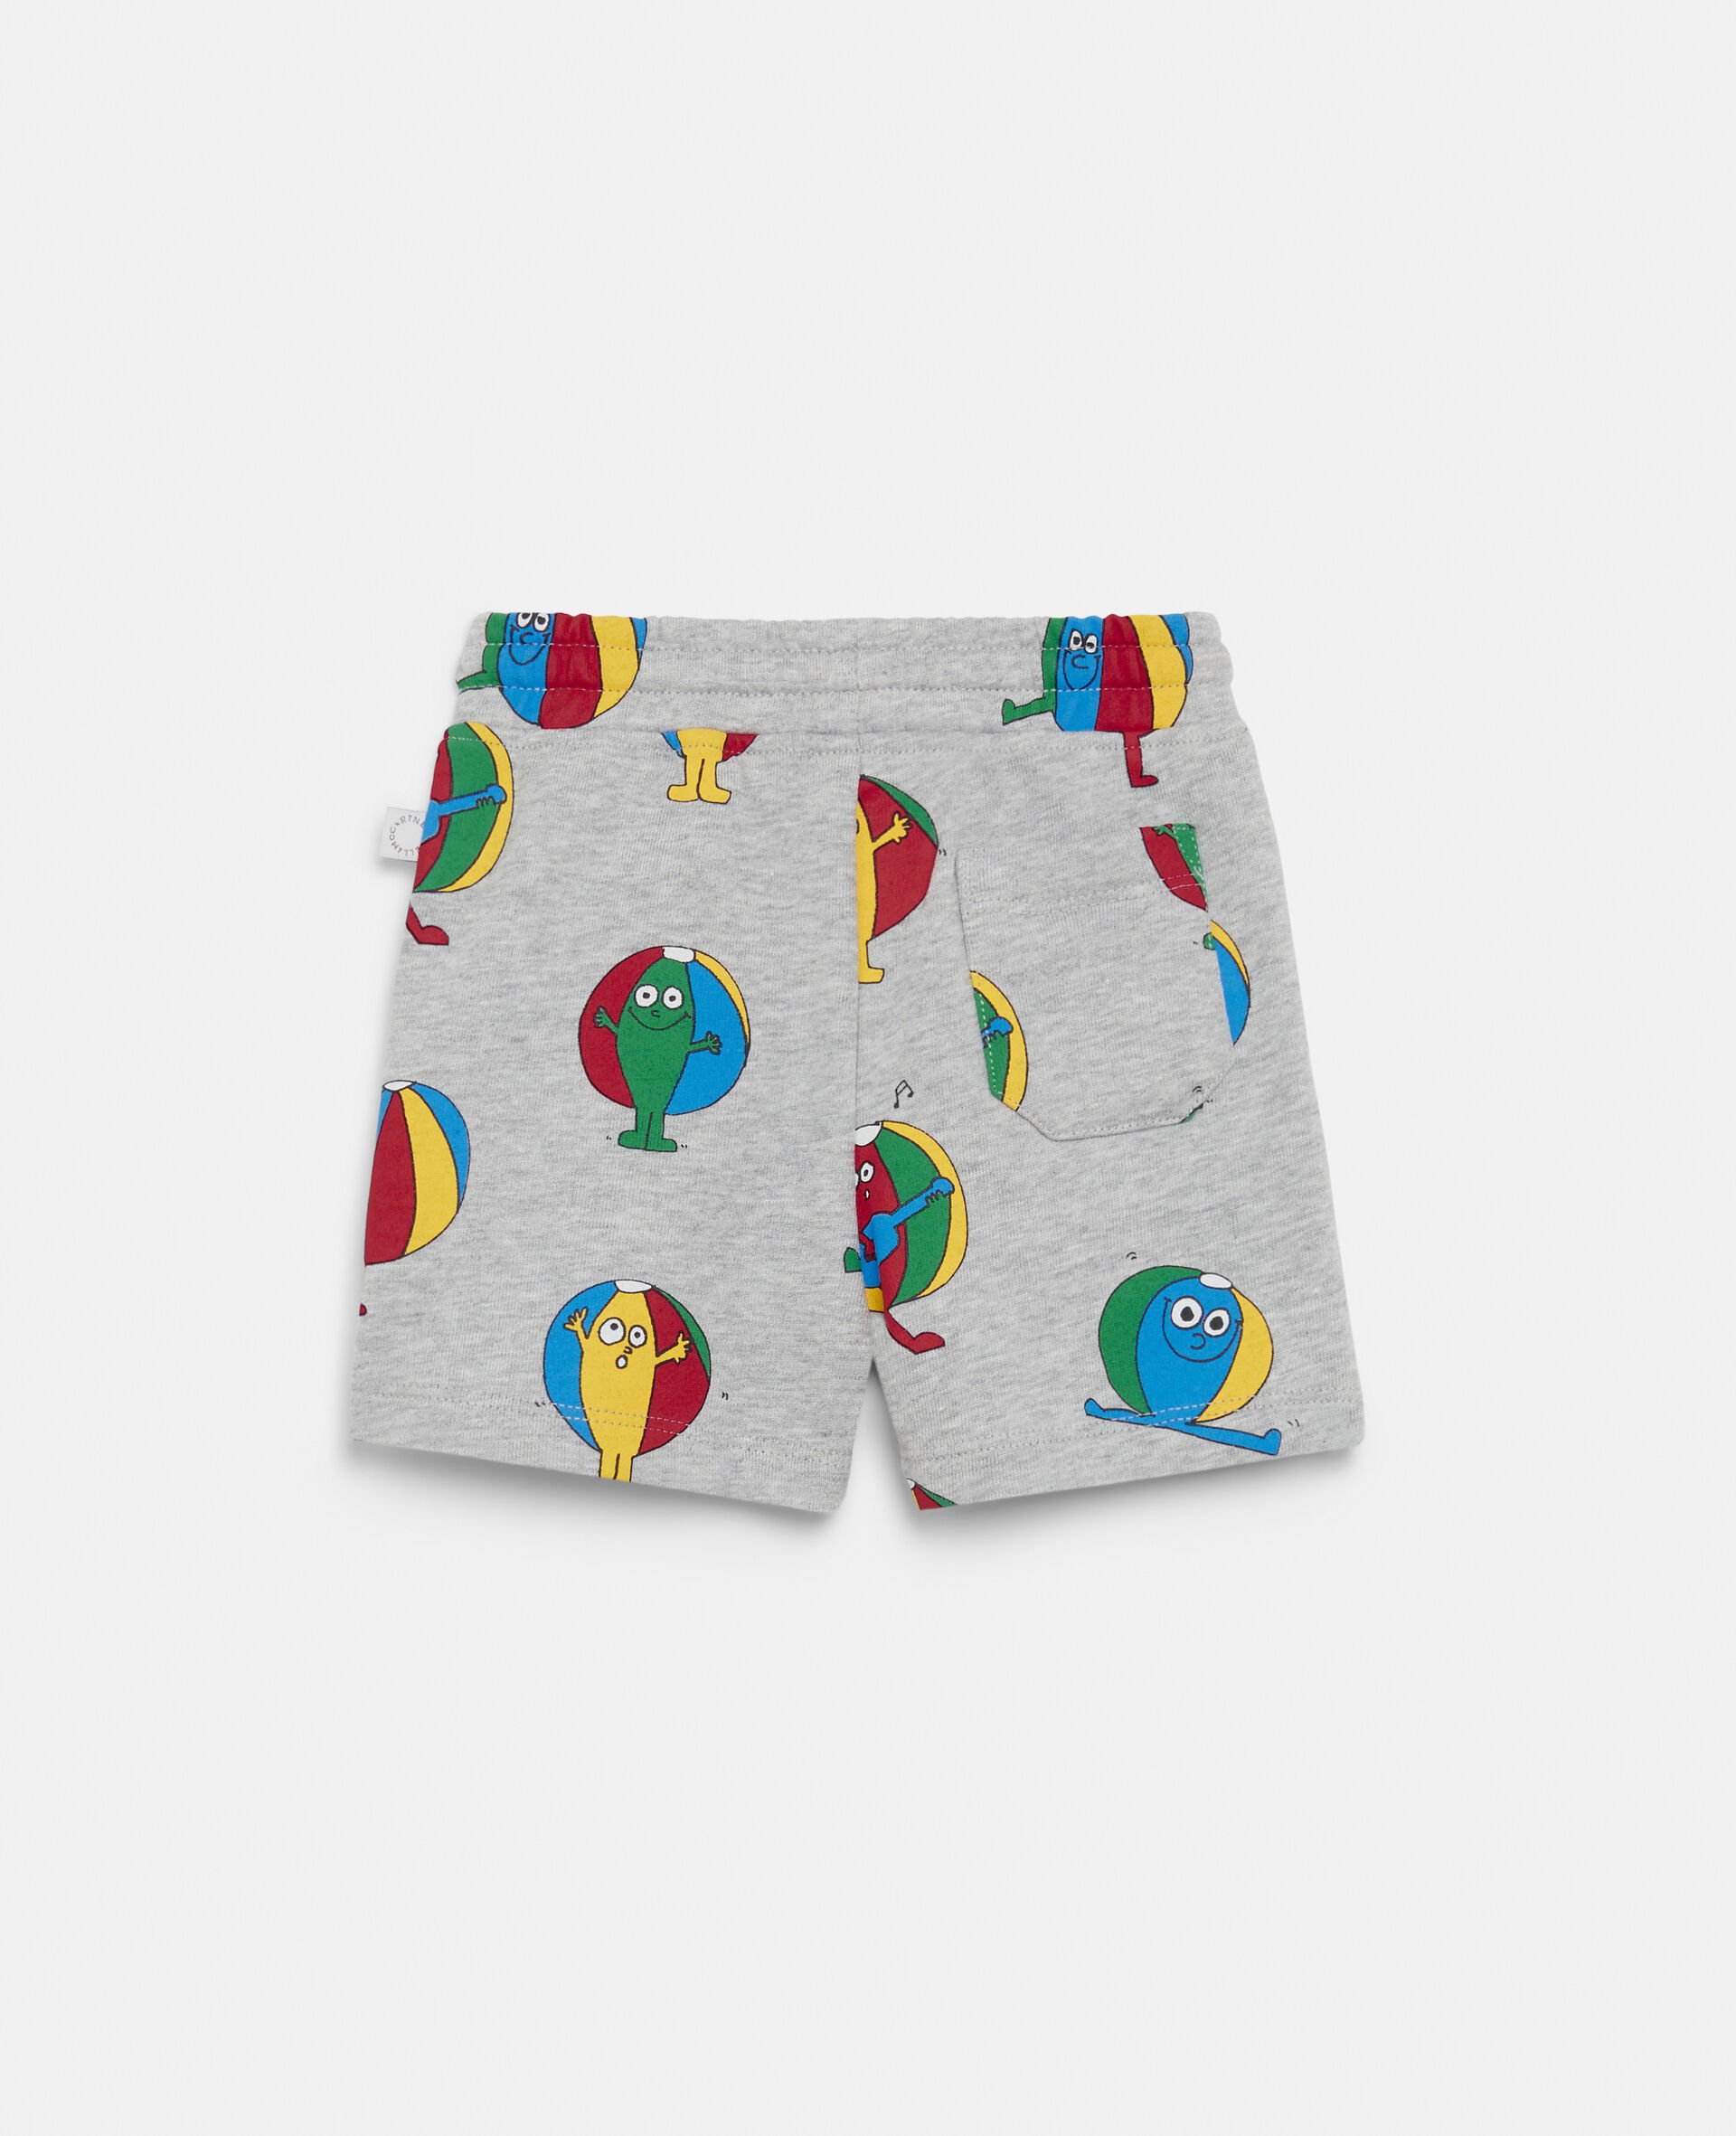 Beach Ball Fleece Shorts-Grey-large image number 2